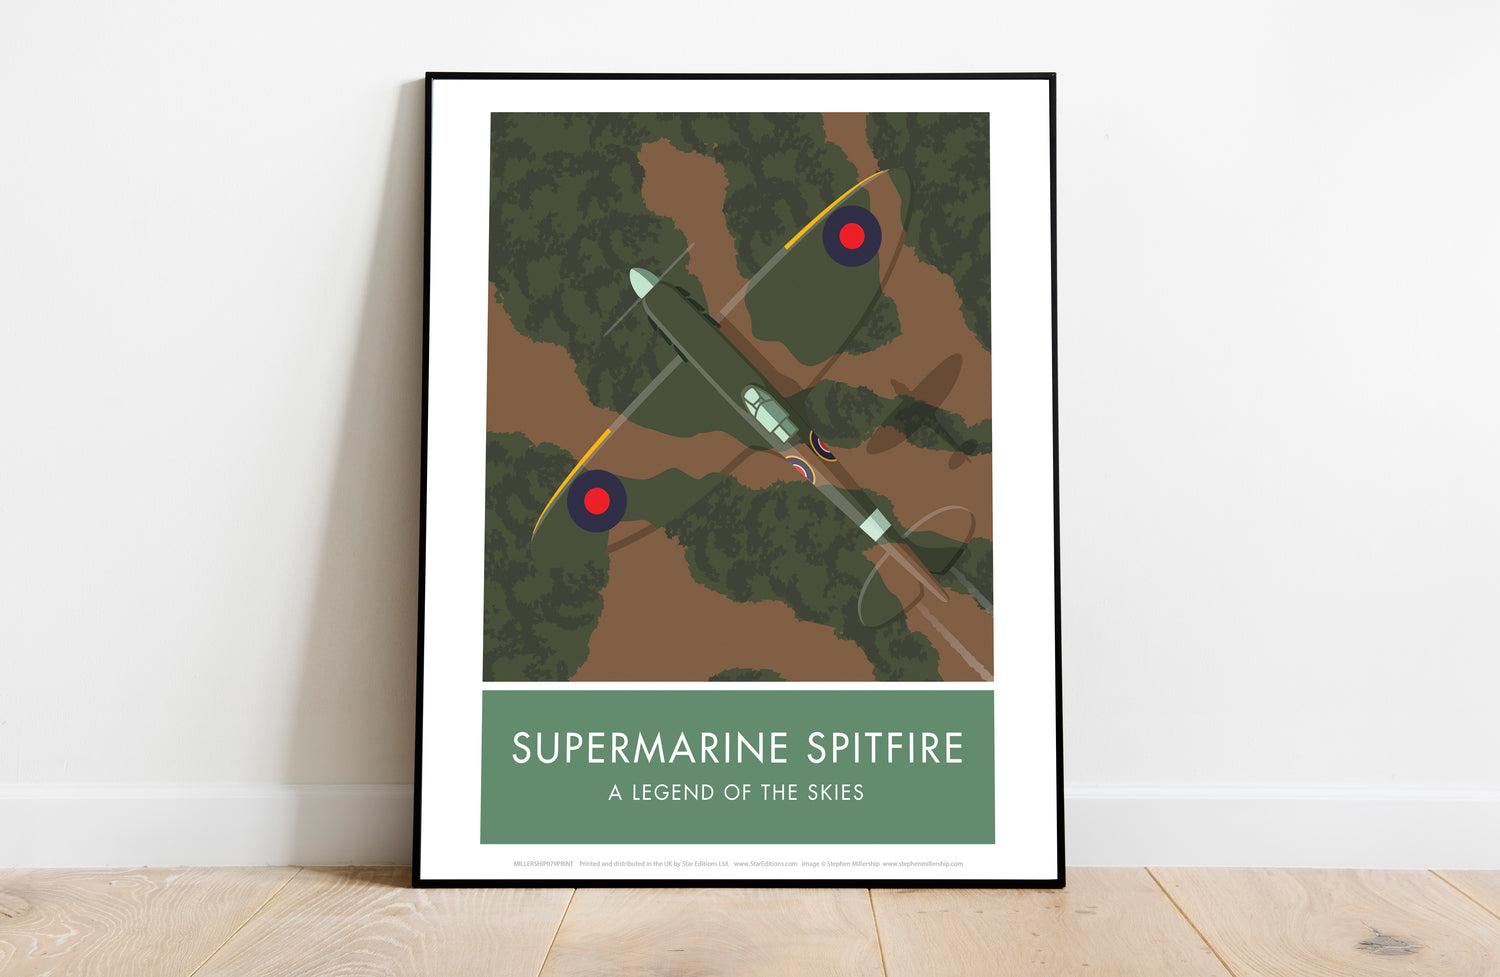 Supermarine Spitfire - Art Print